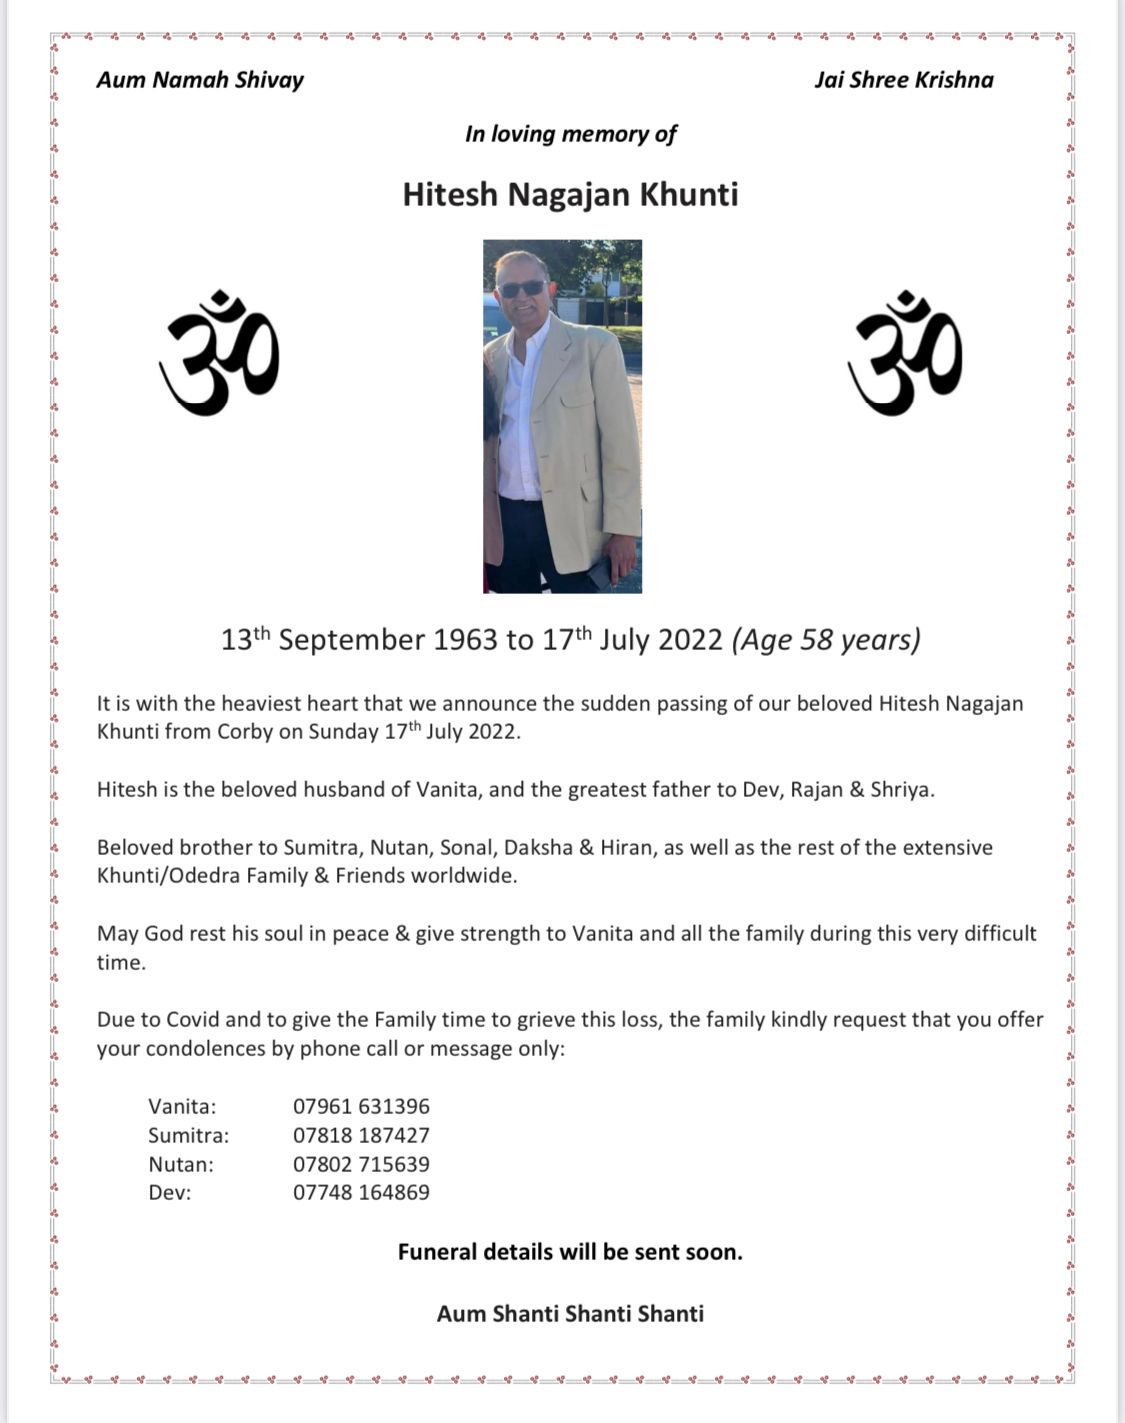 Hitesh Nagajan Khunti passed away